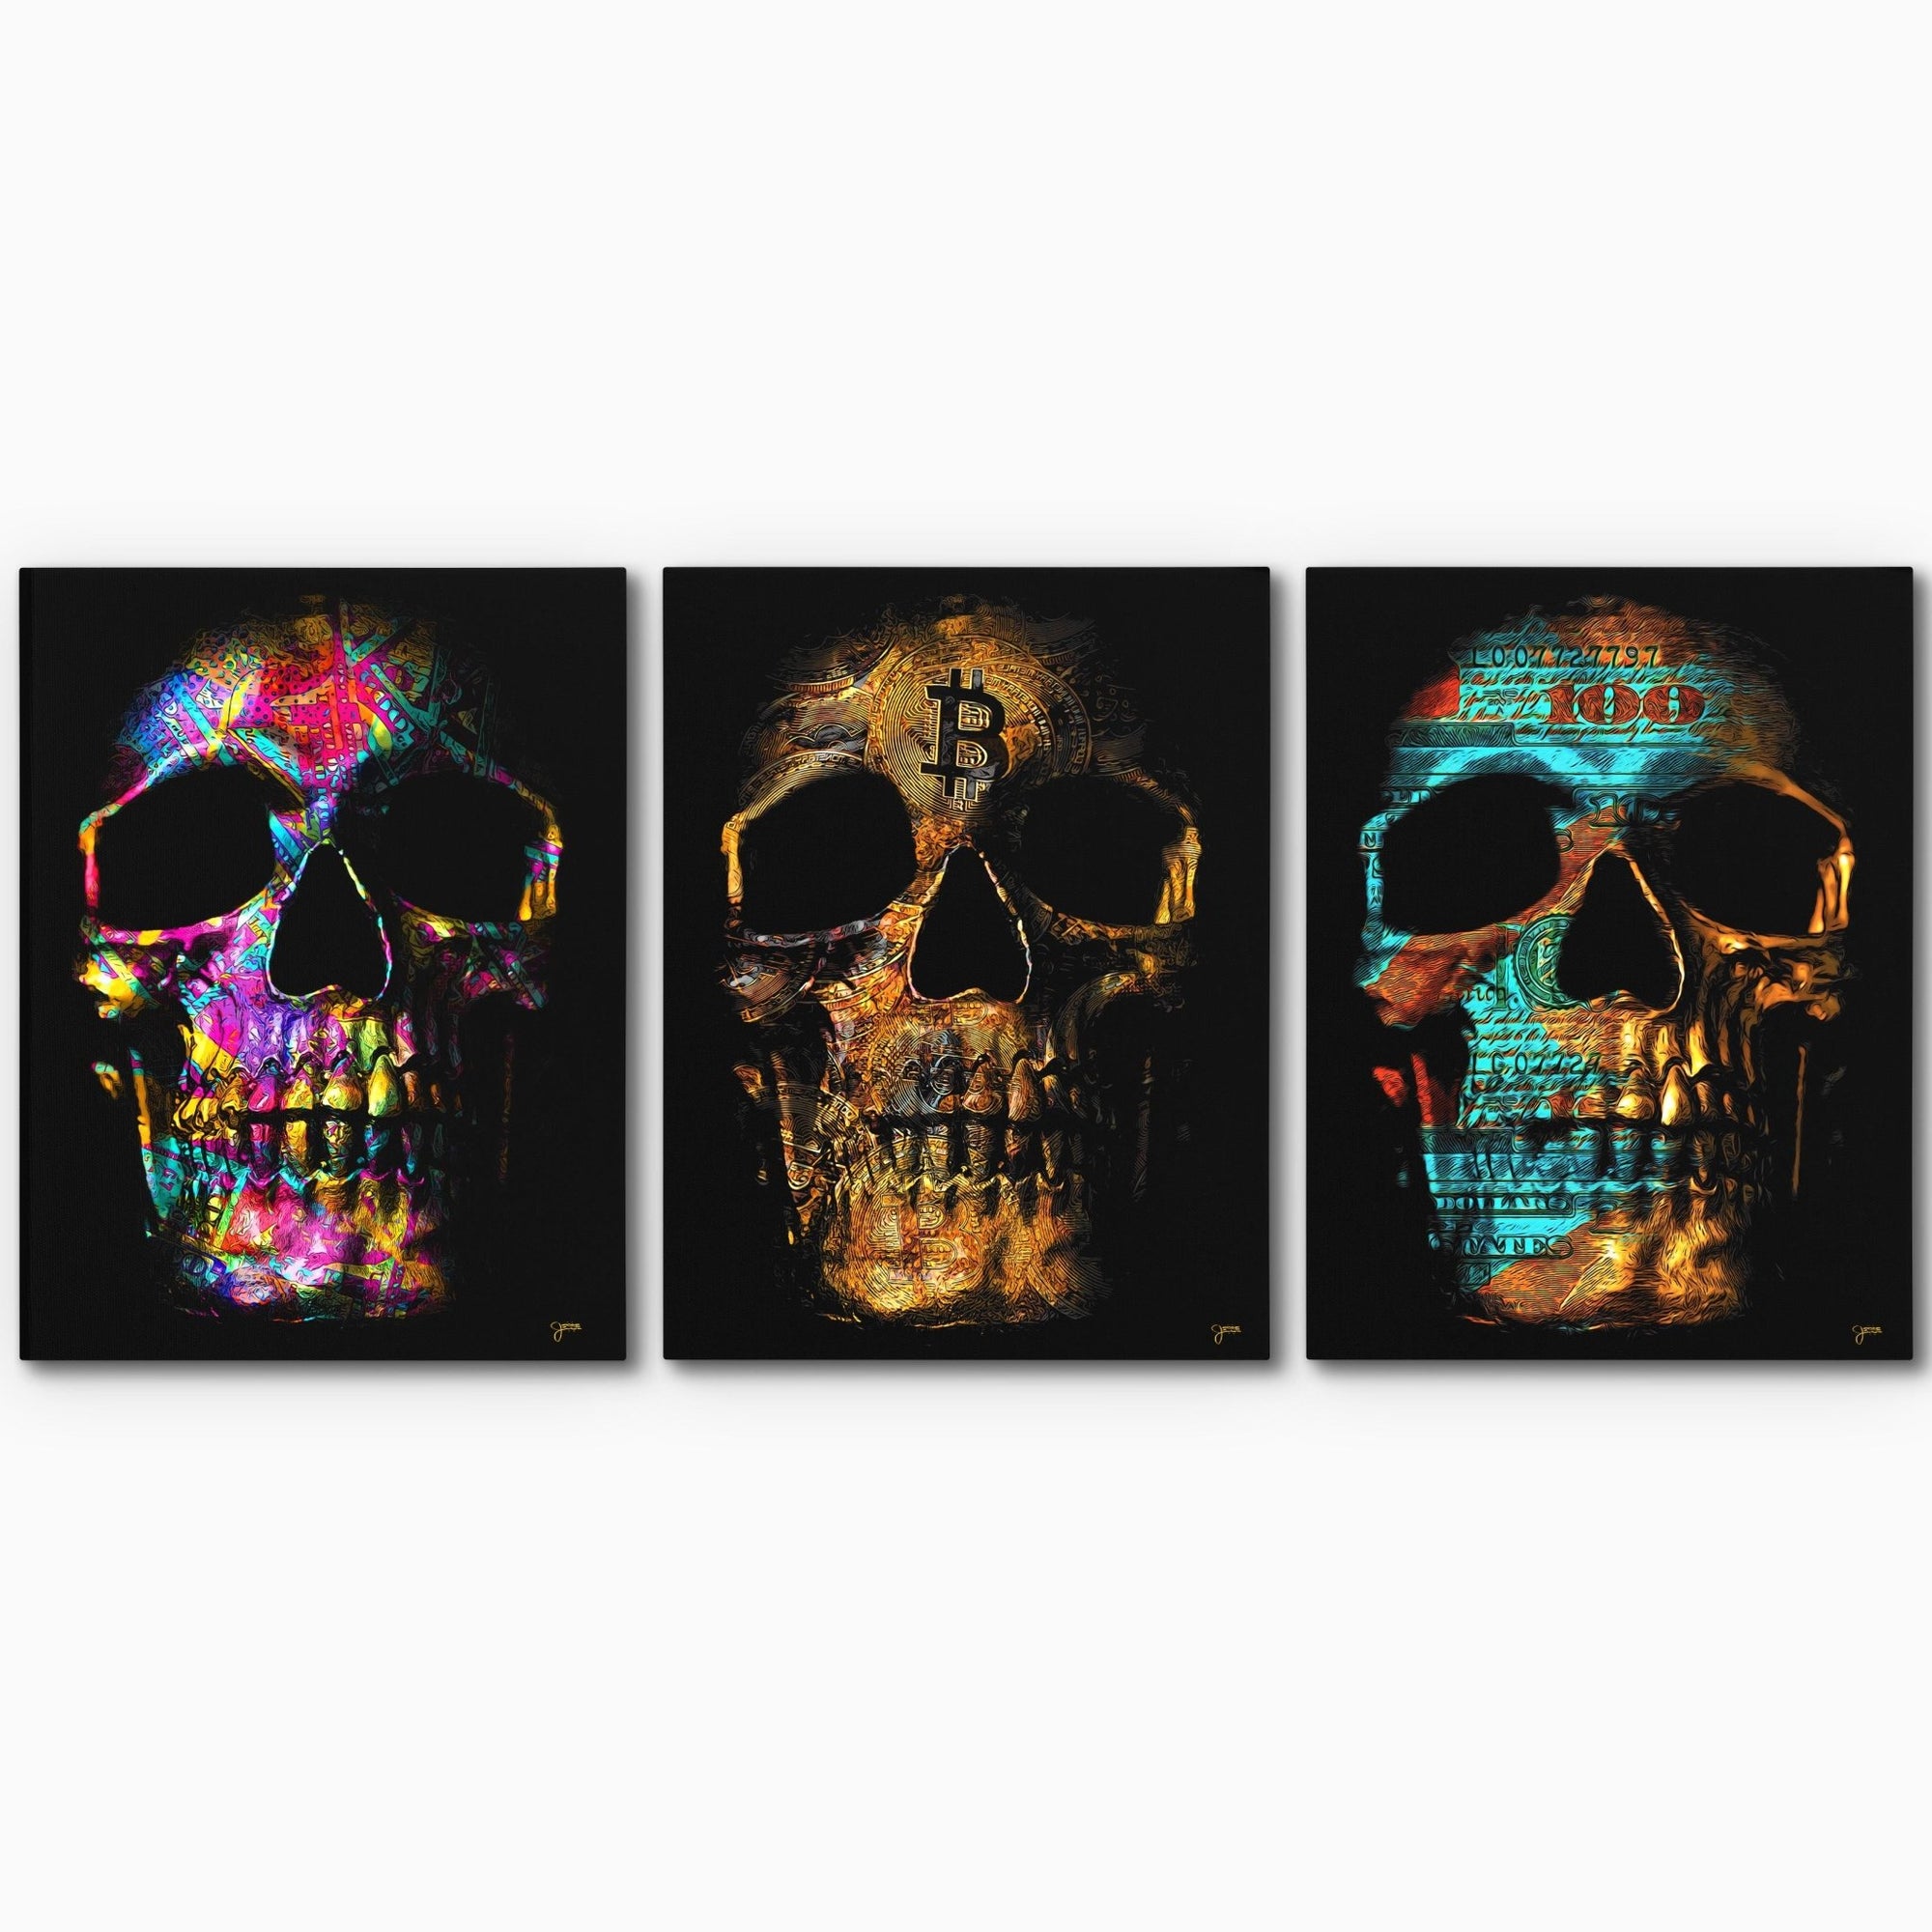 Money Skulls 3 Piece Set - Luxury Wall Art